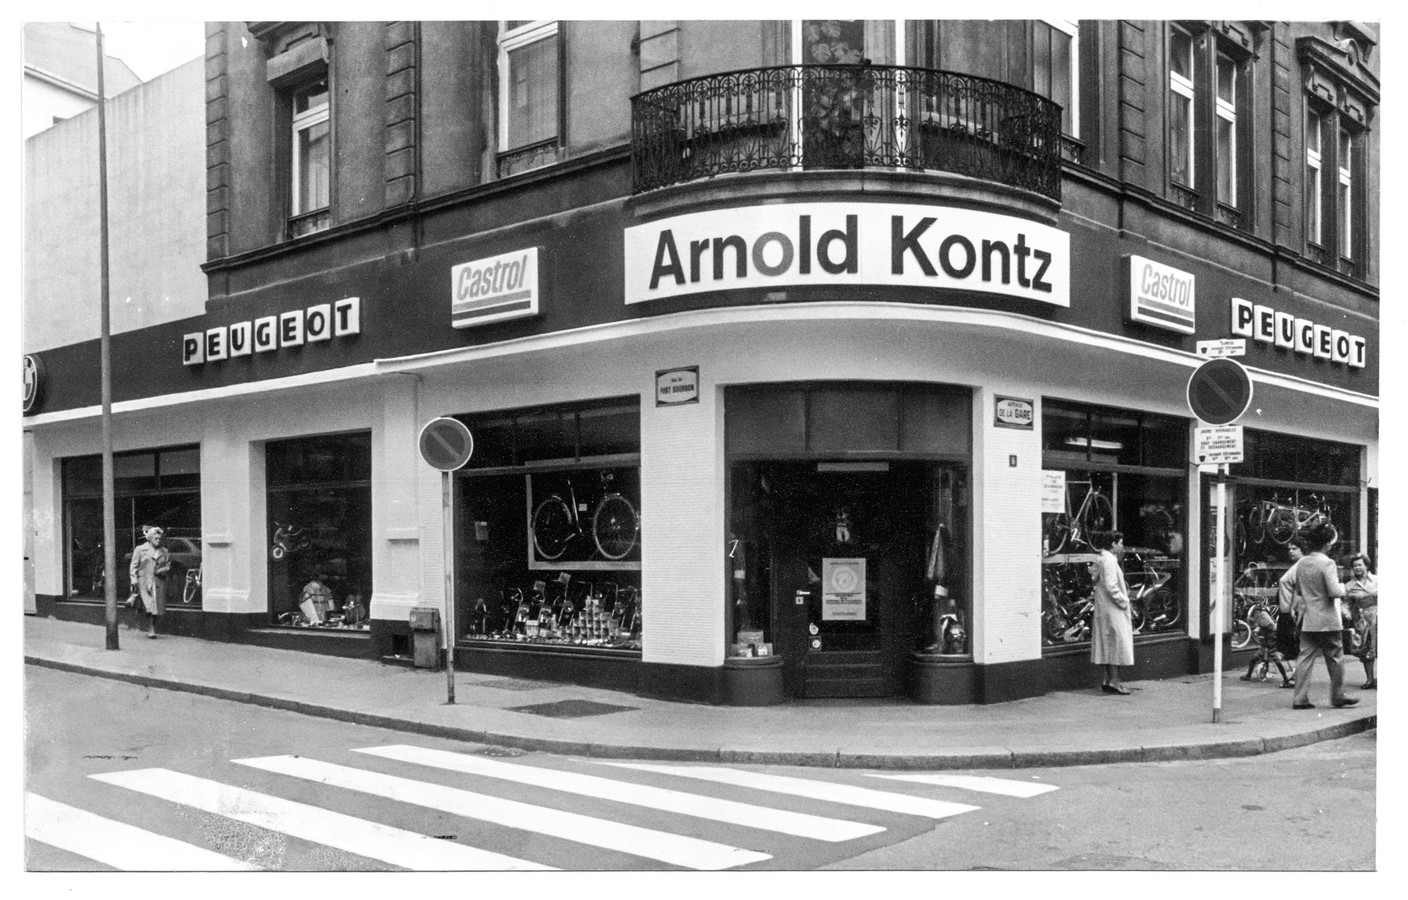 The former cycle shop on the corner of Avenue de la Gare and Rue Bourbon. Photo: Arnold Kontz Group